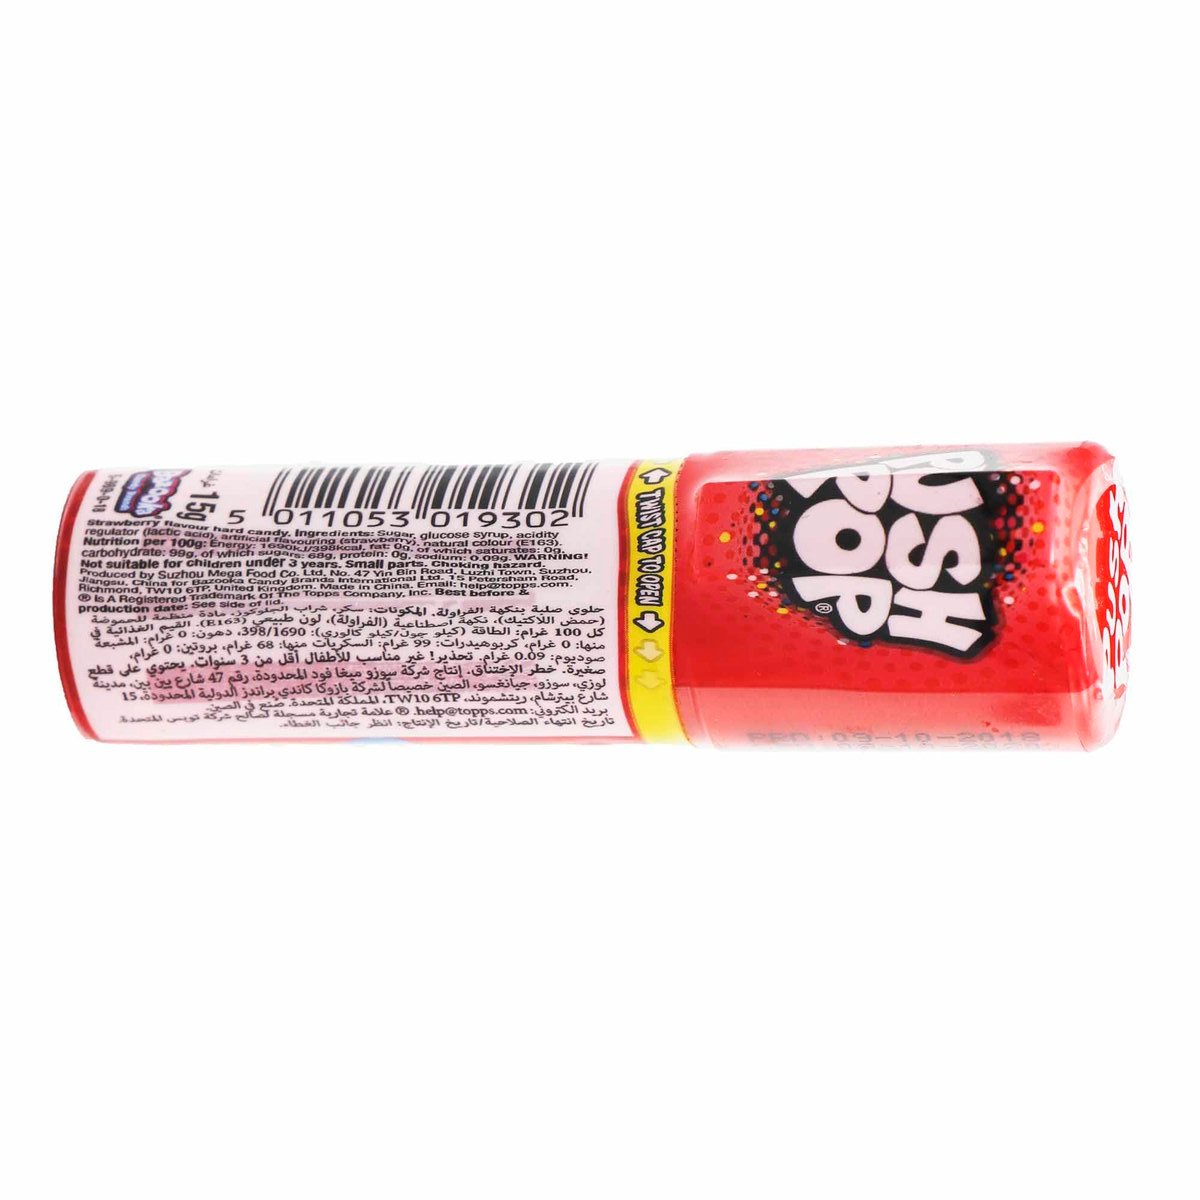 Topps Bazooka Push Pop Strawberry 15 g